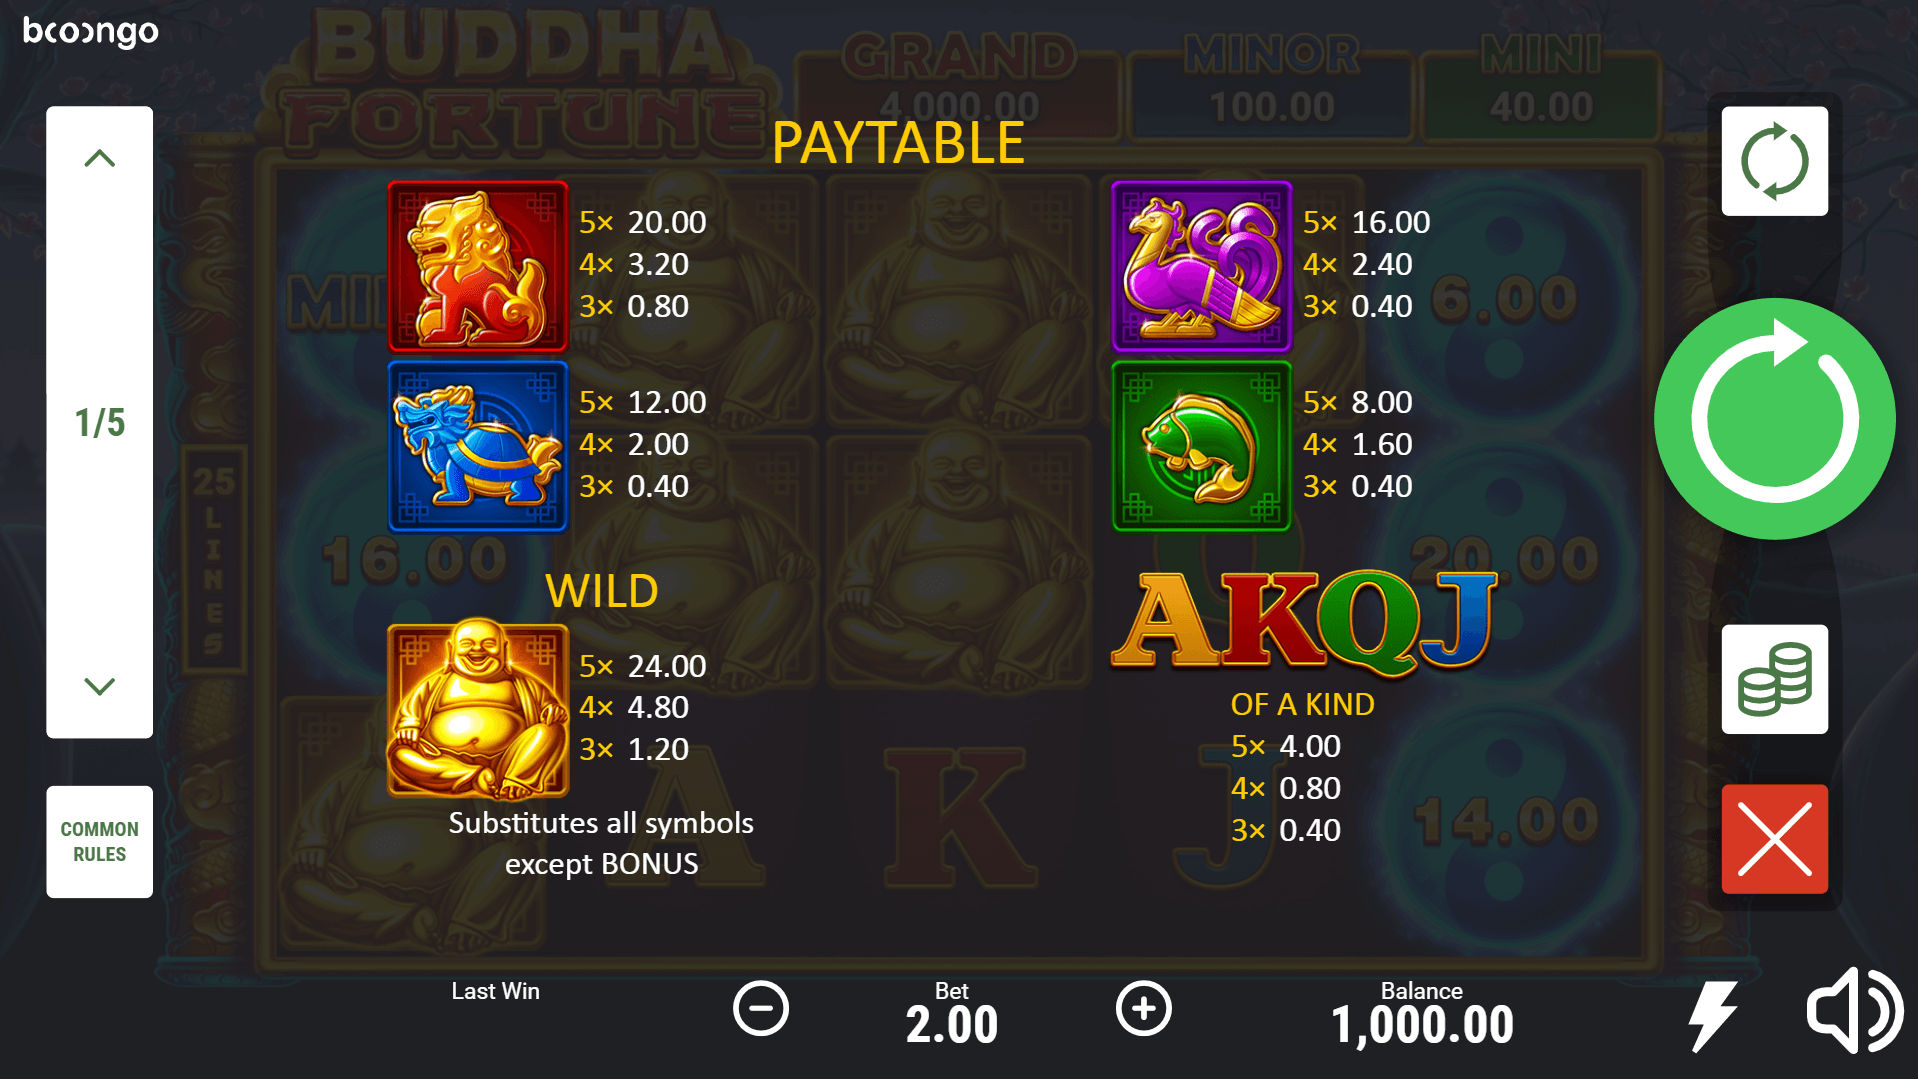 buddha fortune hold and win slot machine detail image 0